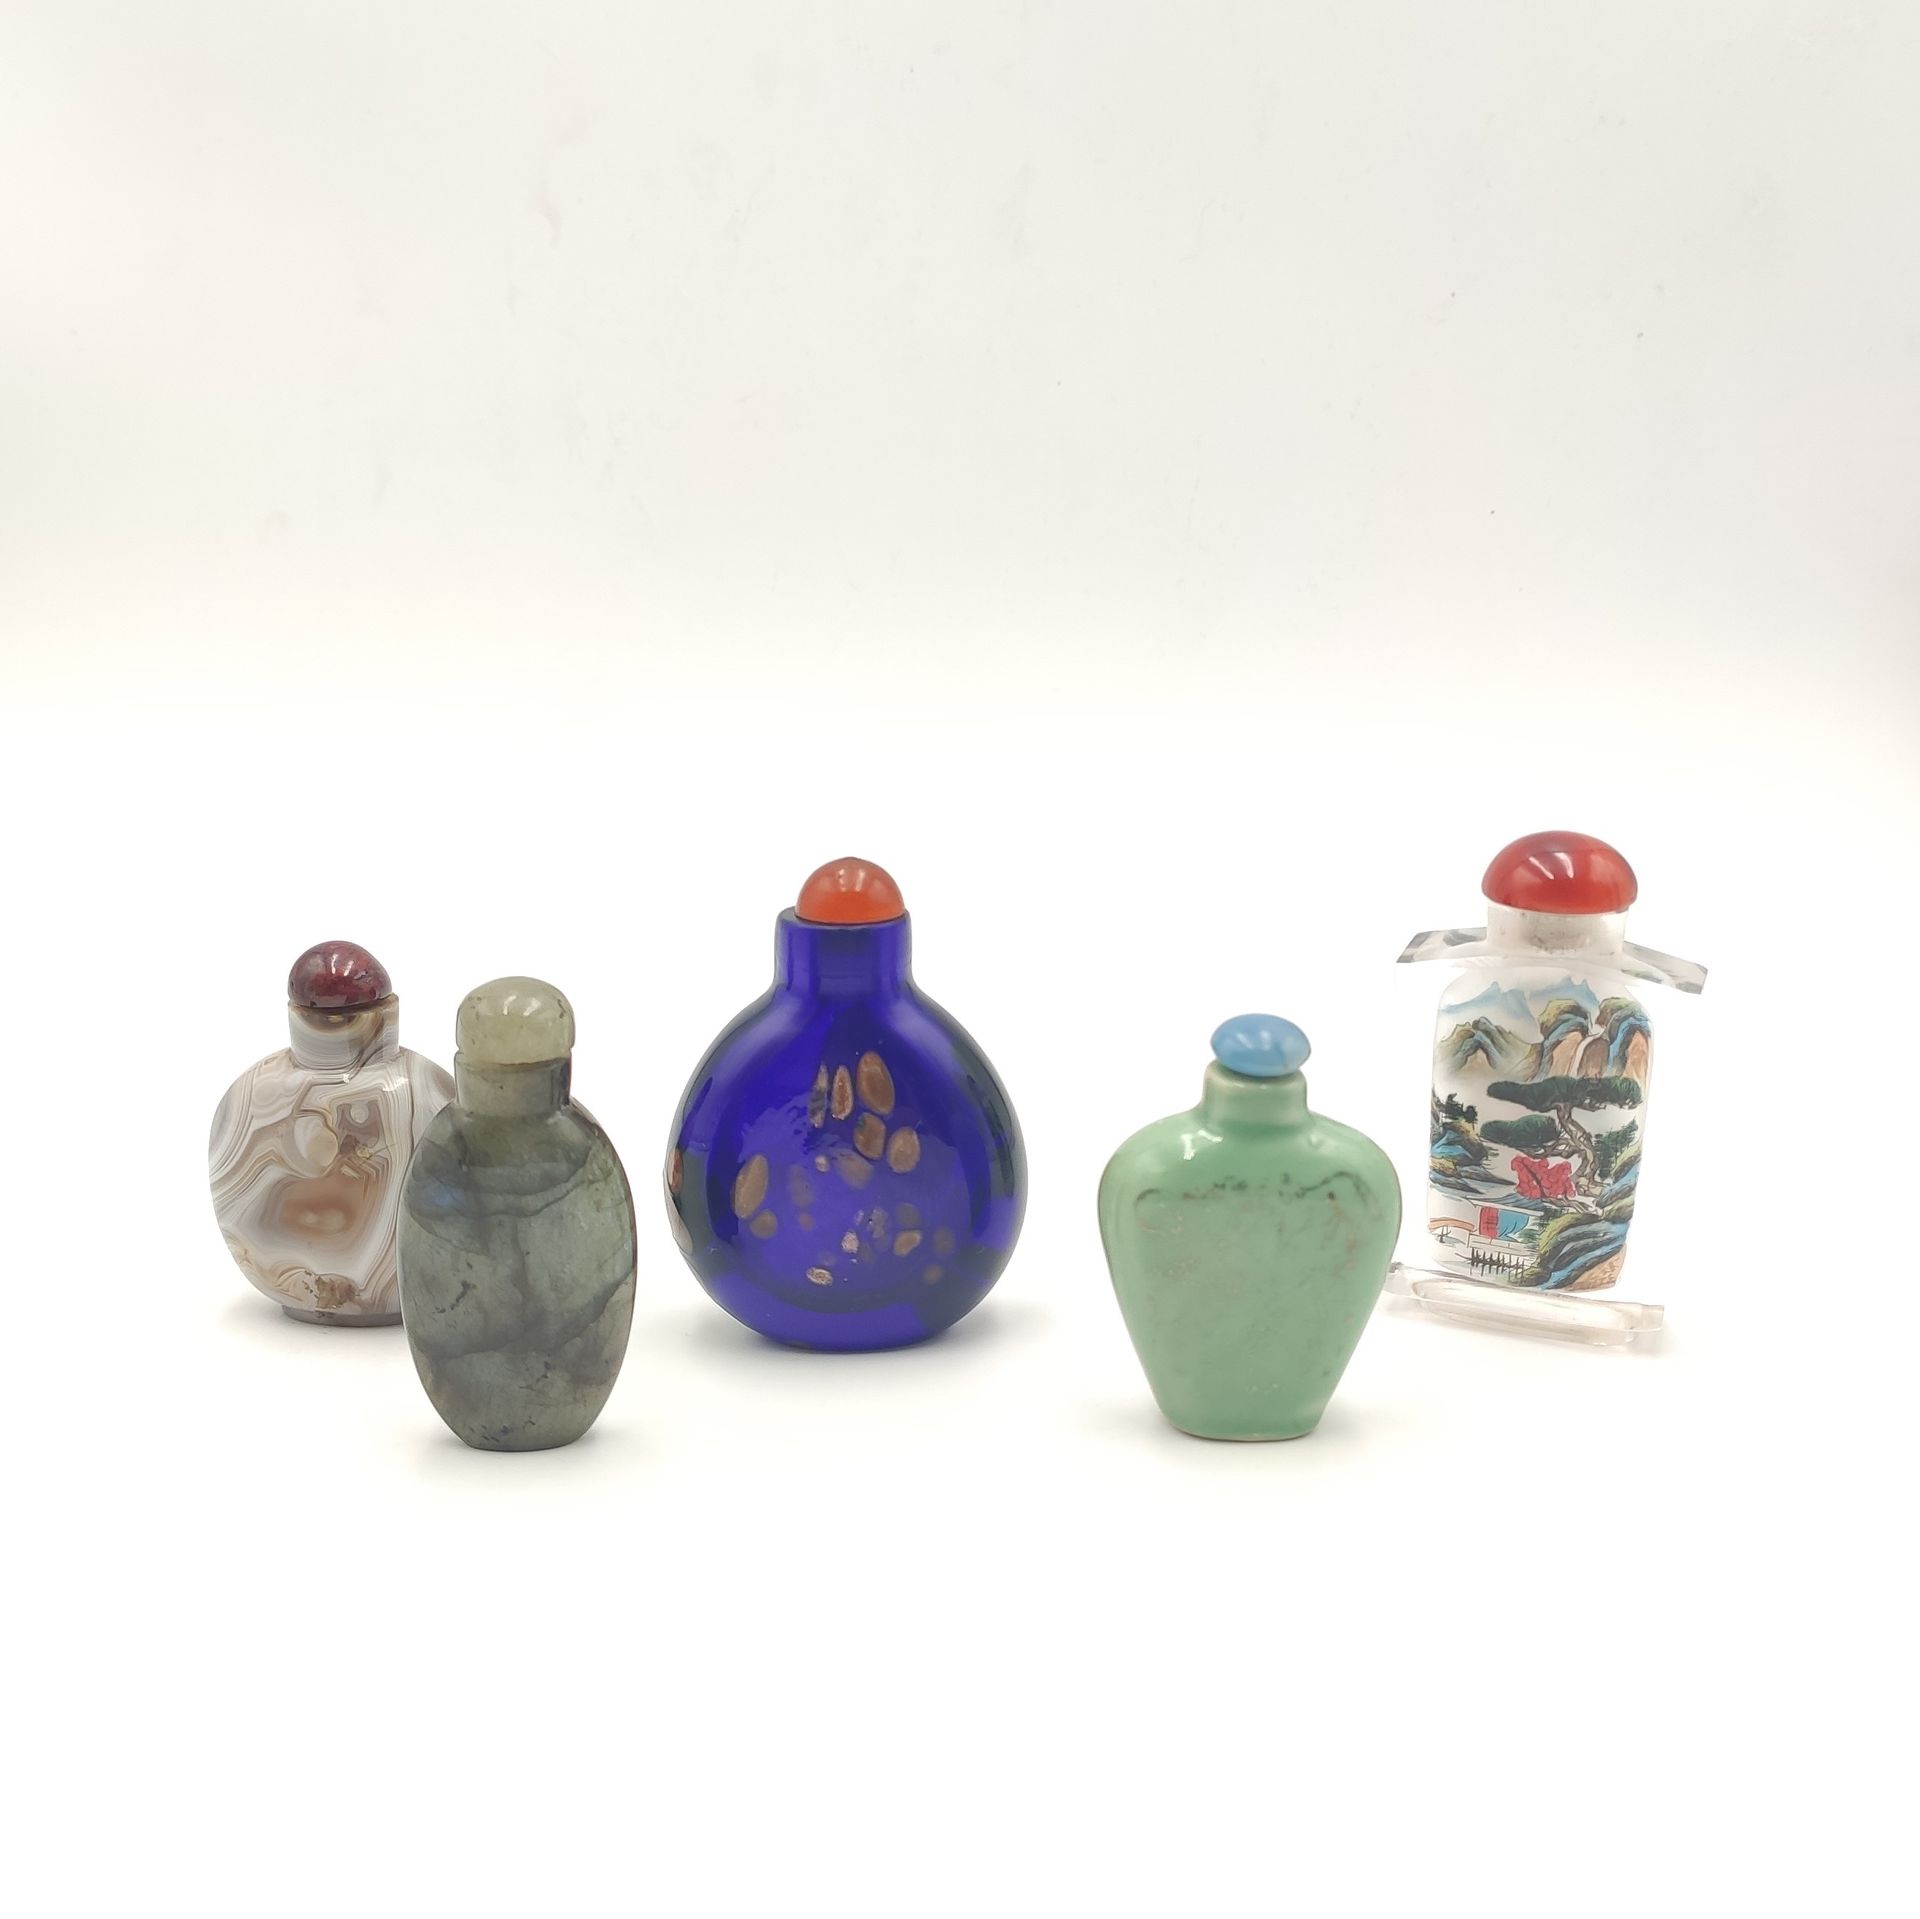 Null 一套五个鼻烟壶，其中两个是由硬石（拉布拉多石和玛瑙）制成的，一个是模仿砂金石的蓝色玻璃，一个是抹金的绿色玻璃，还有一个是有风景图案的玻璃。